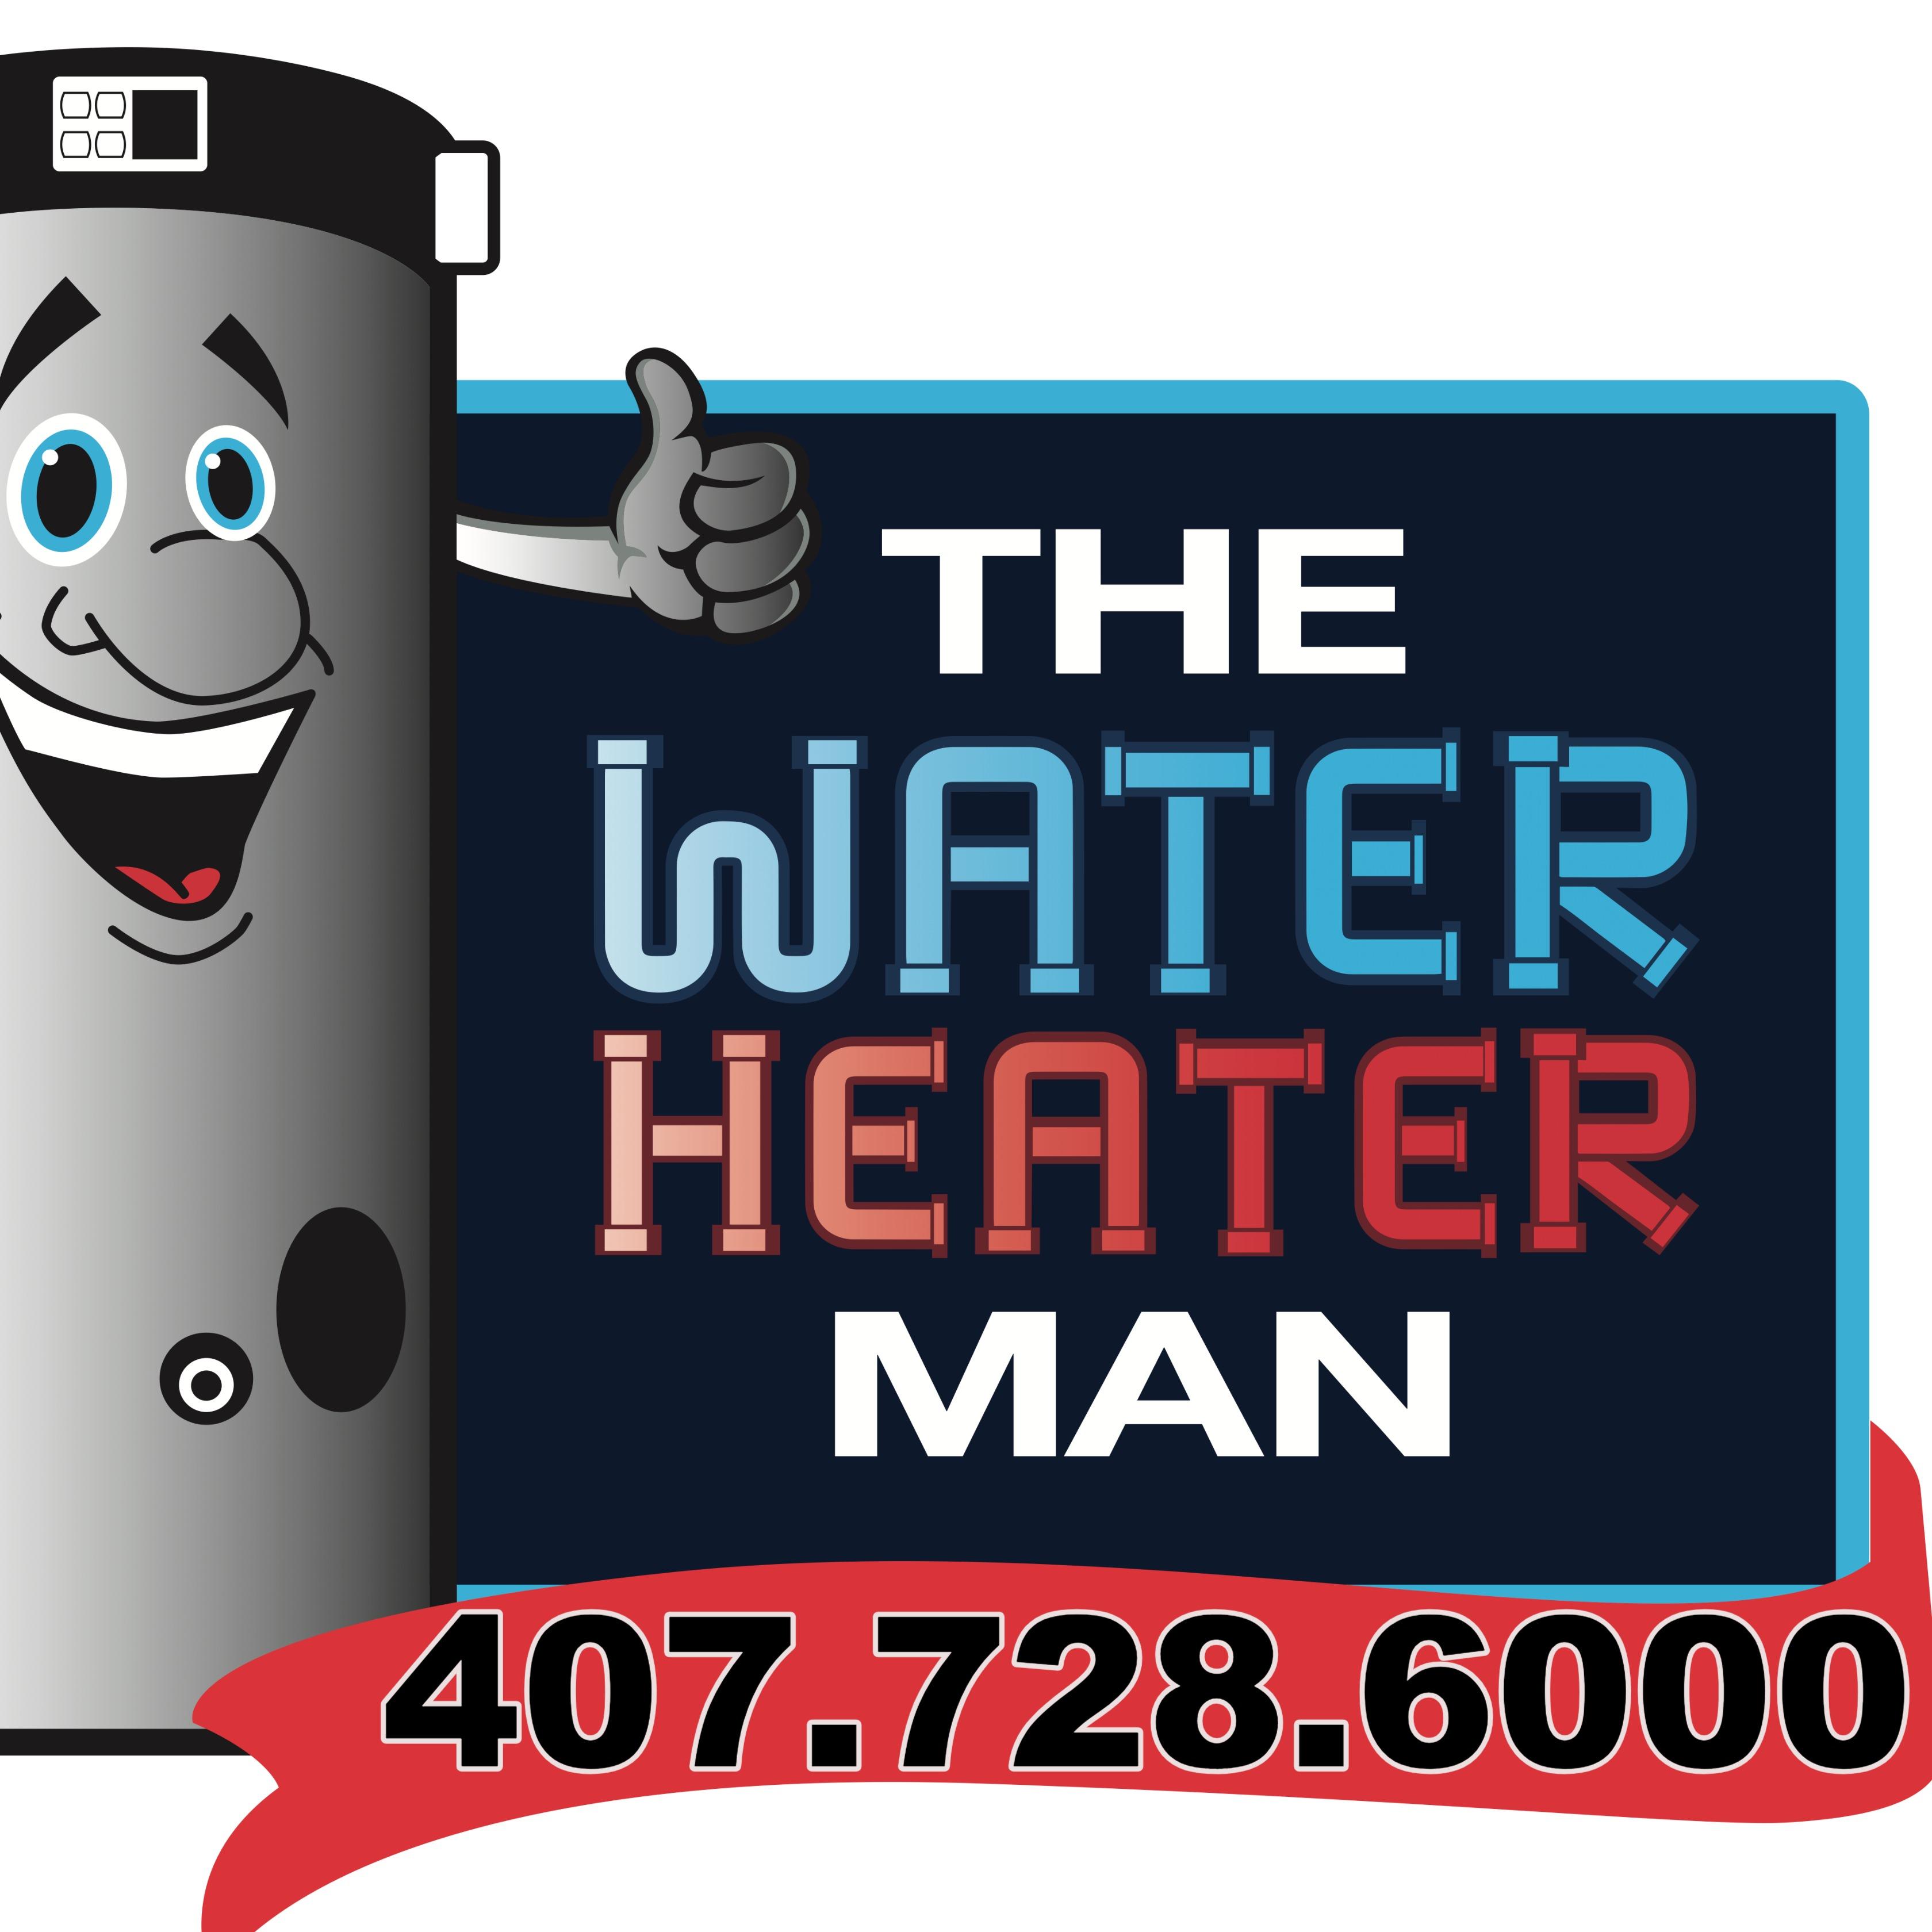 Water Heater Man - Orlando, FL 32826 - (407)728-6000 | ShowMeLocal.com